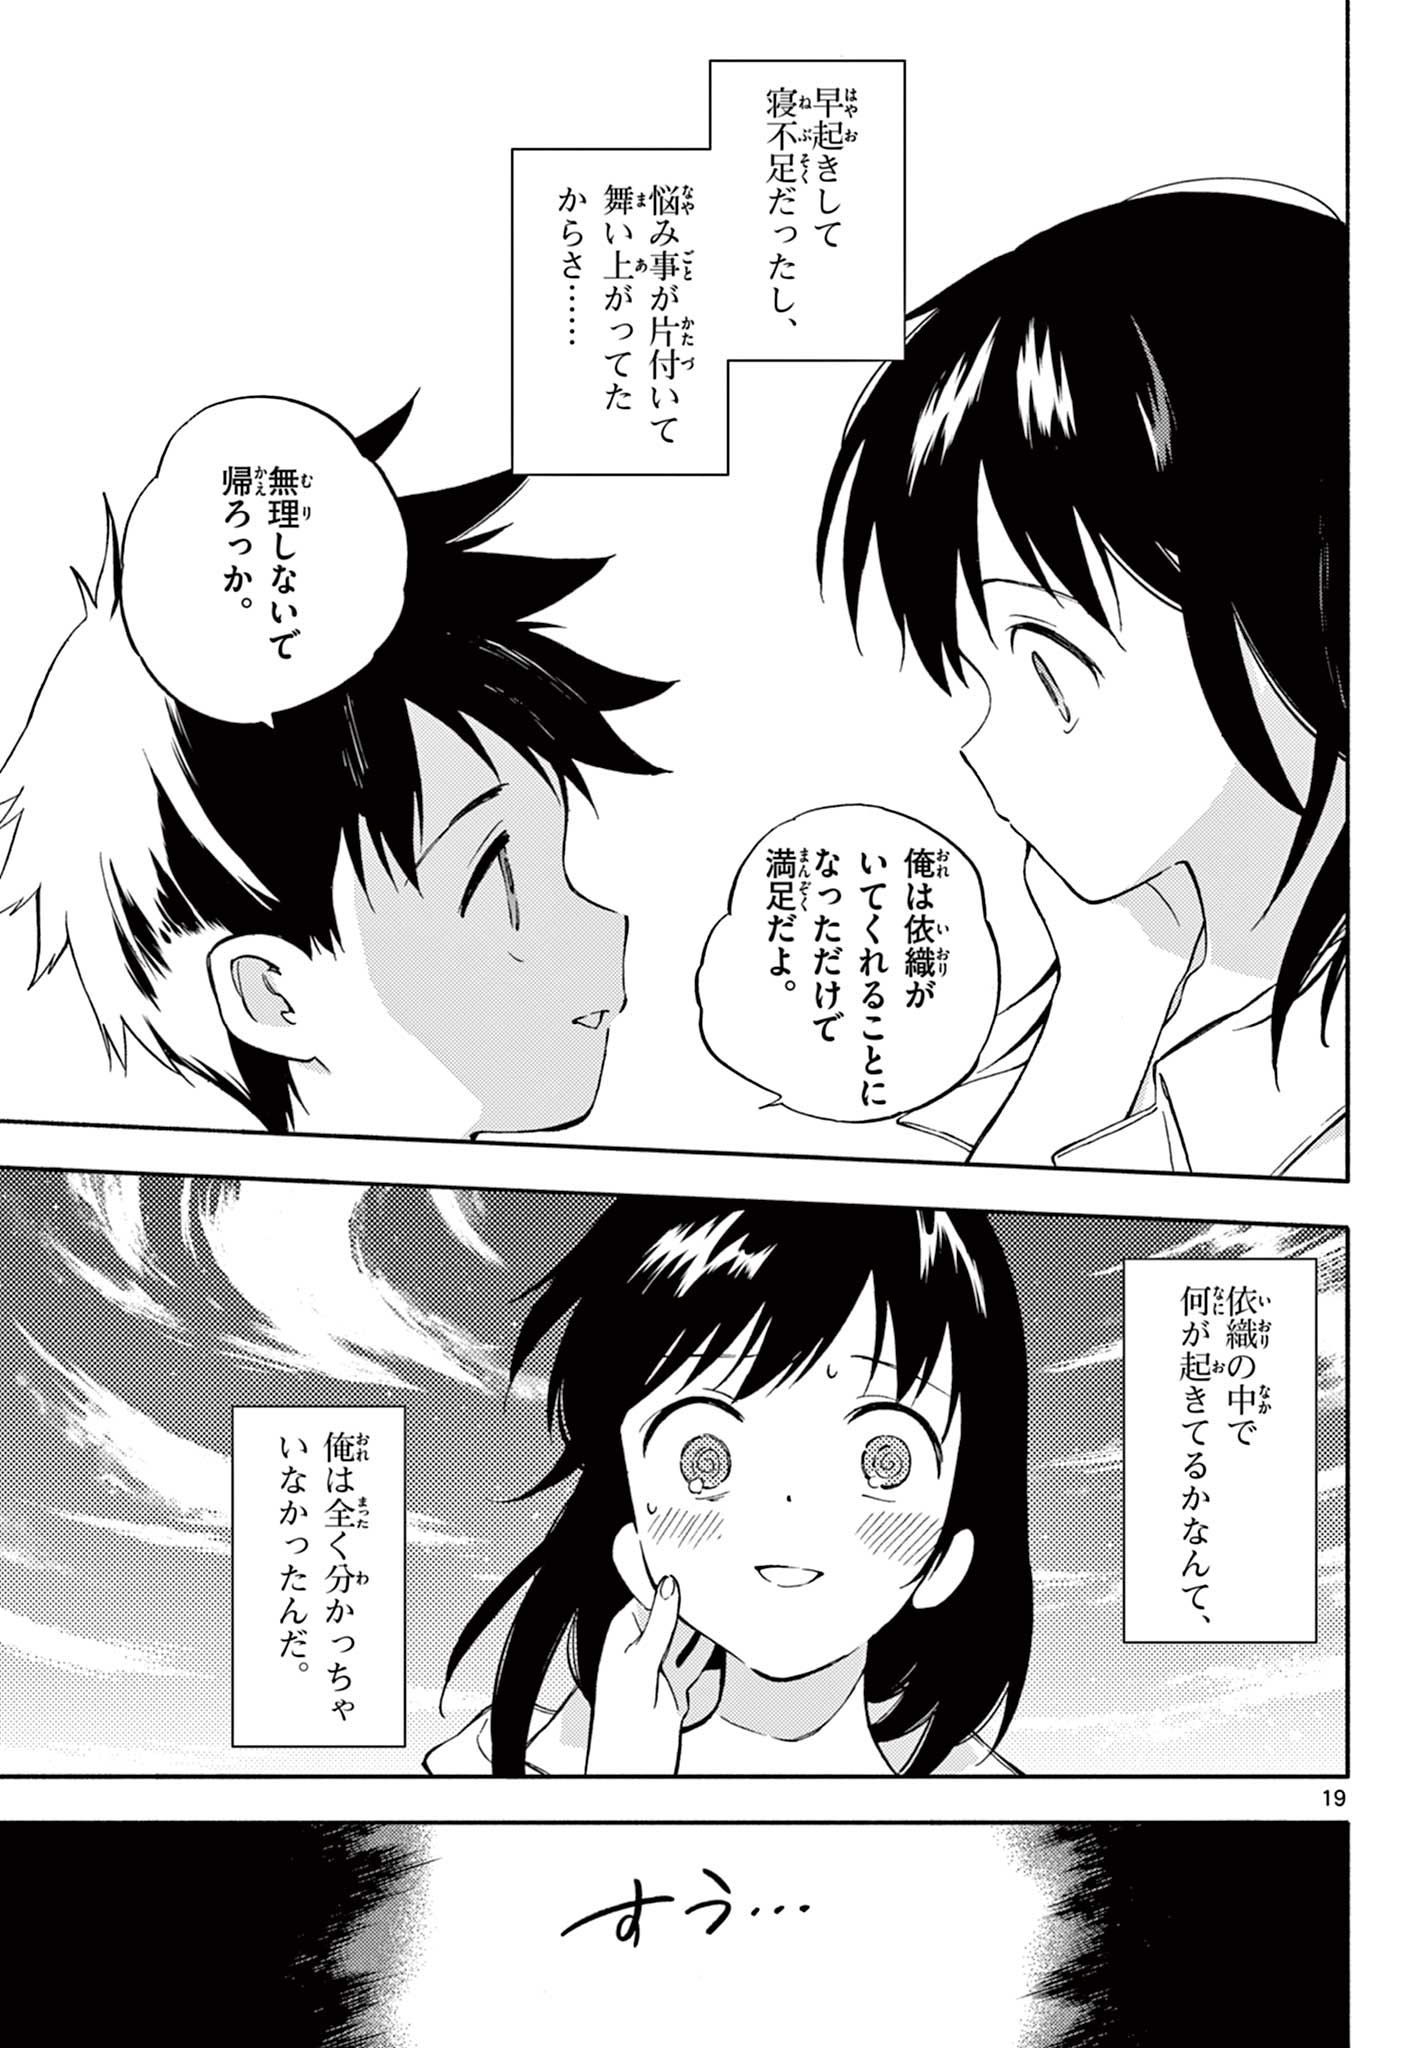 Nami no Shijima no Horizont - Chapter 14.2 - Page 7